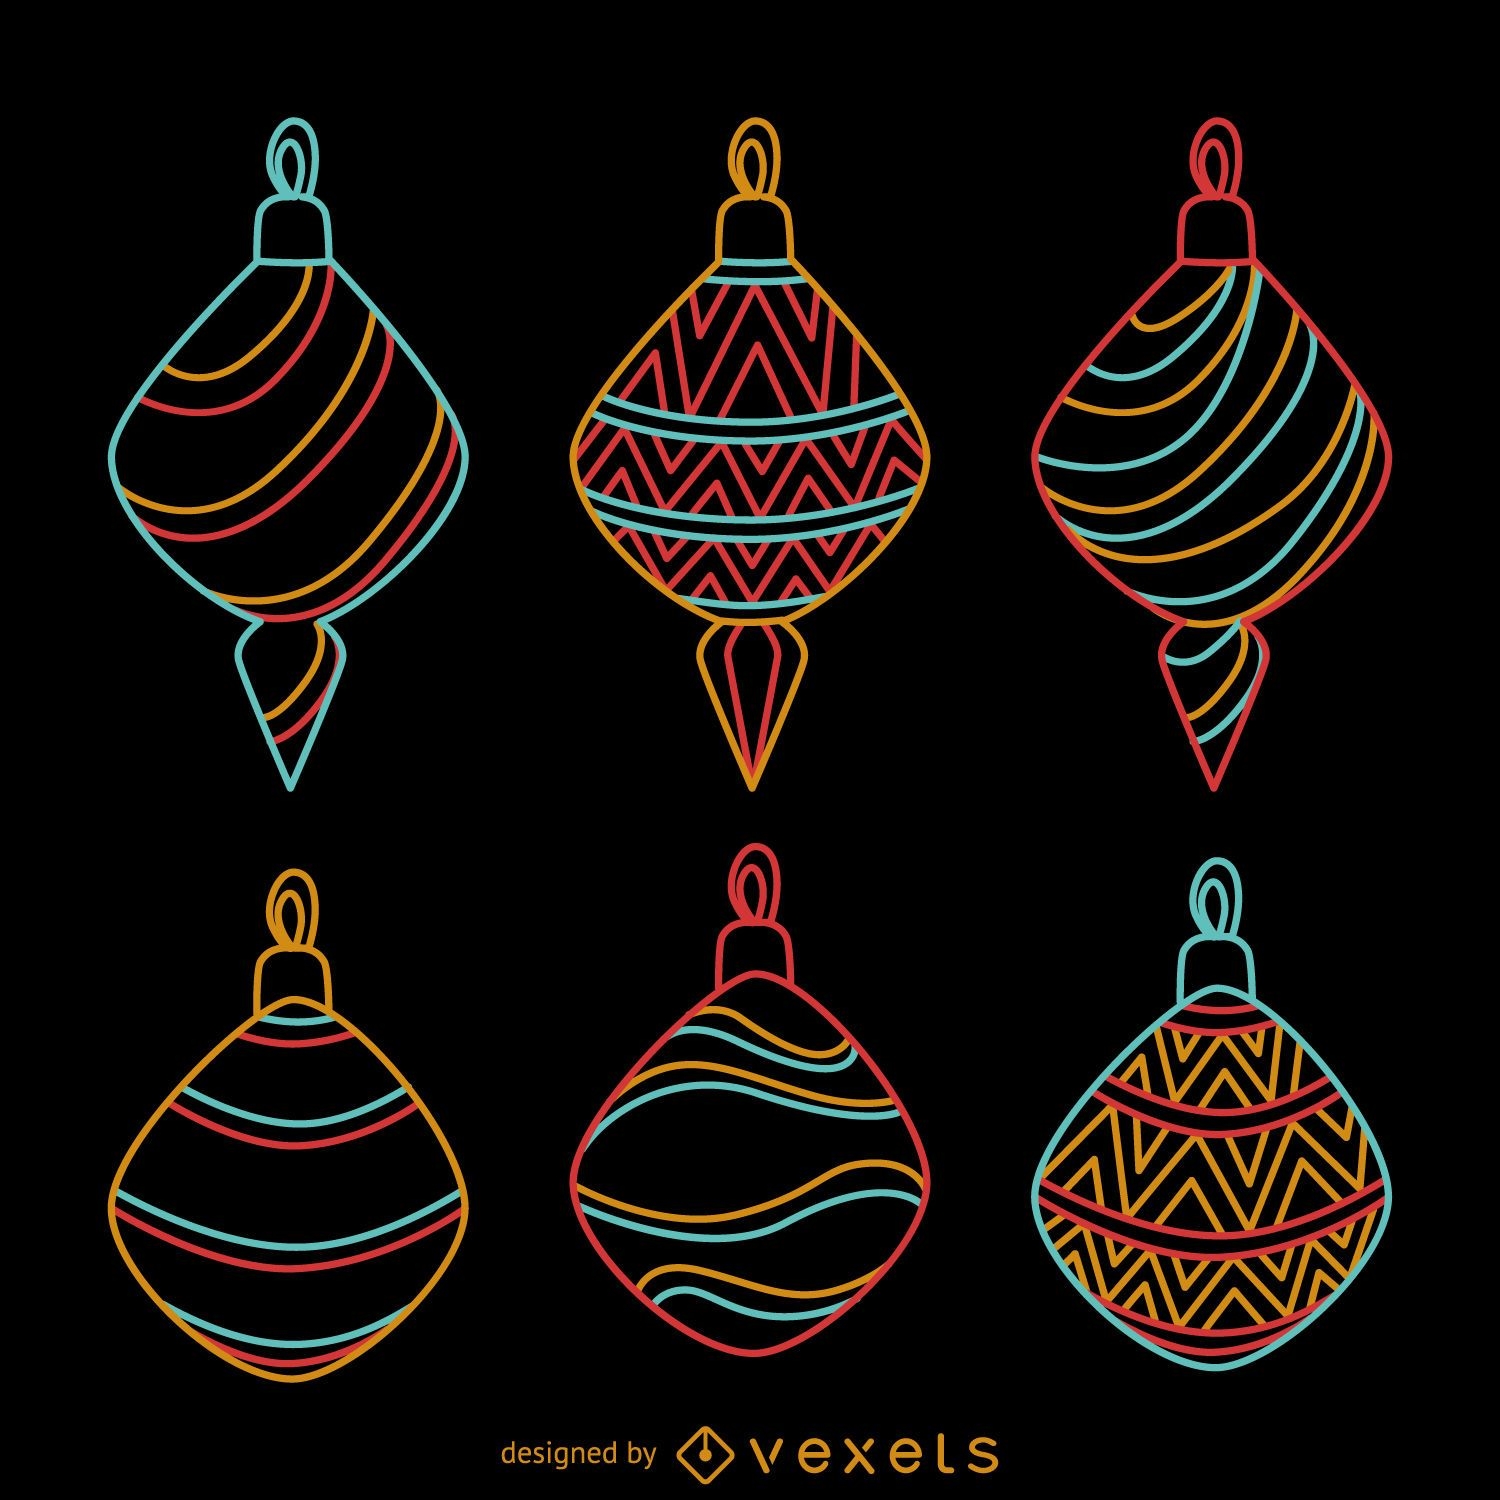 Neon Christmas decorative ornaments